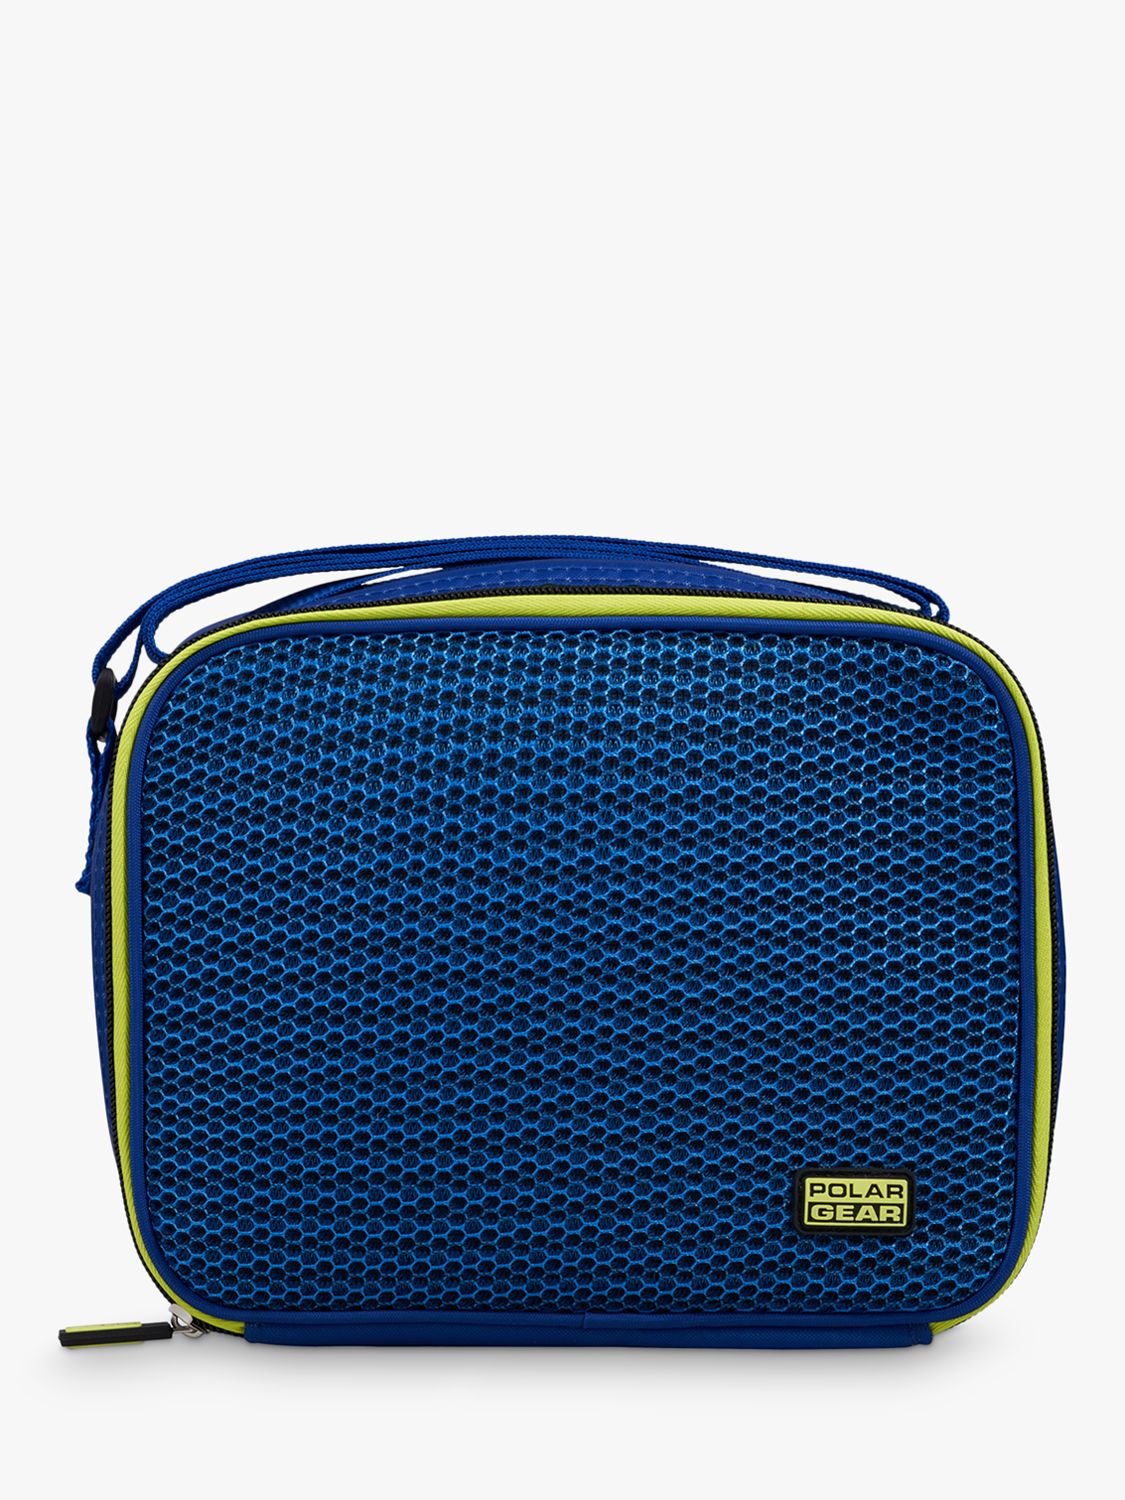 Black & Blue Polar Gear Active Personal Cooler Bag